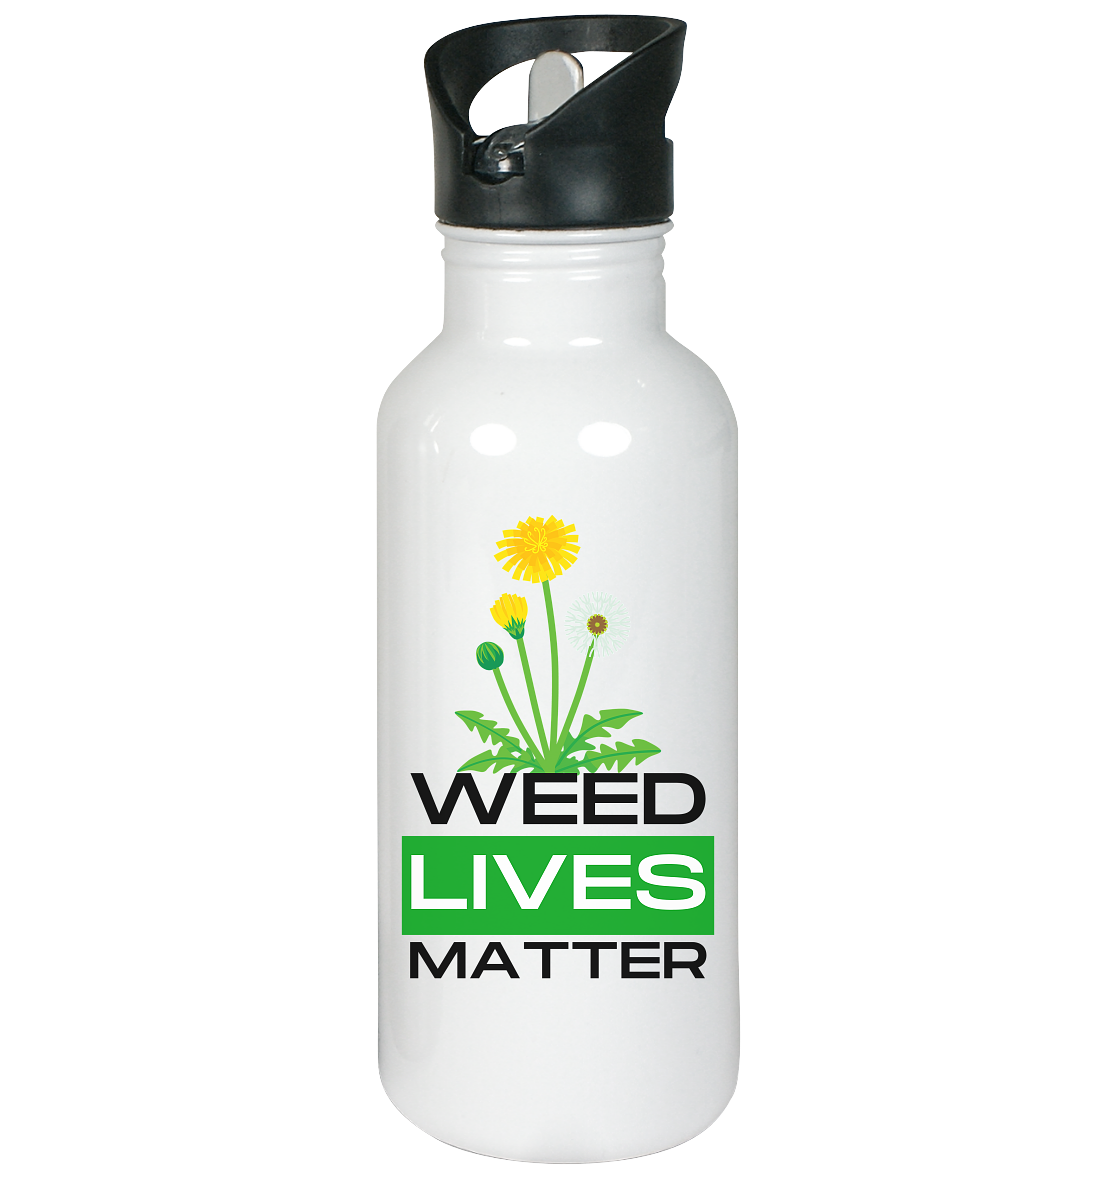 Weed lives matter - Edelstahl-Trinkflasche